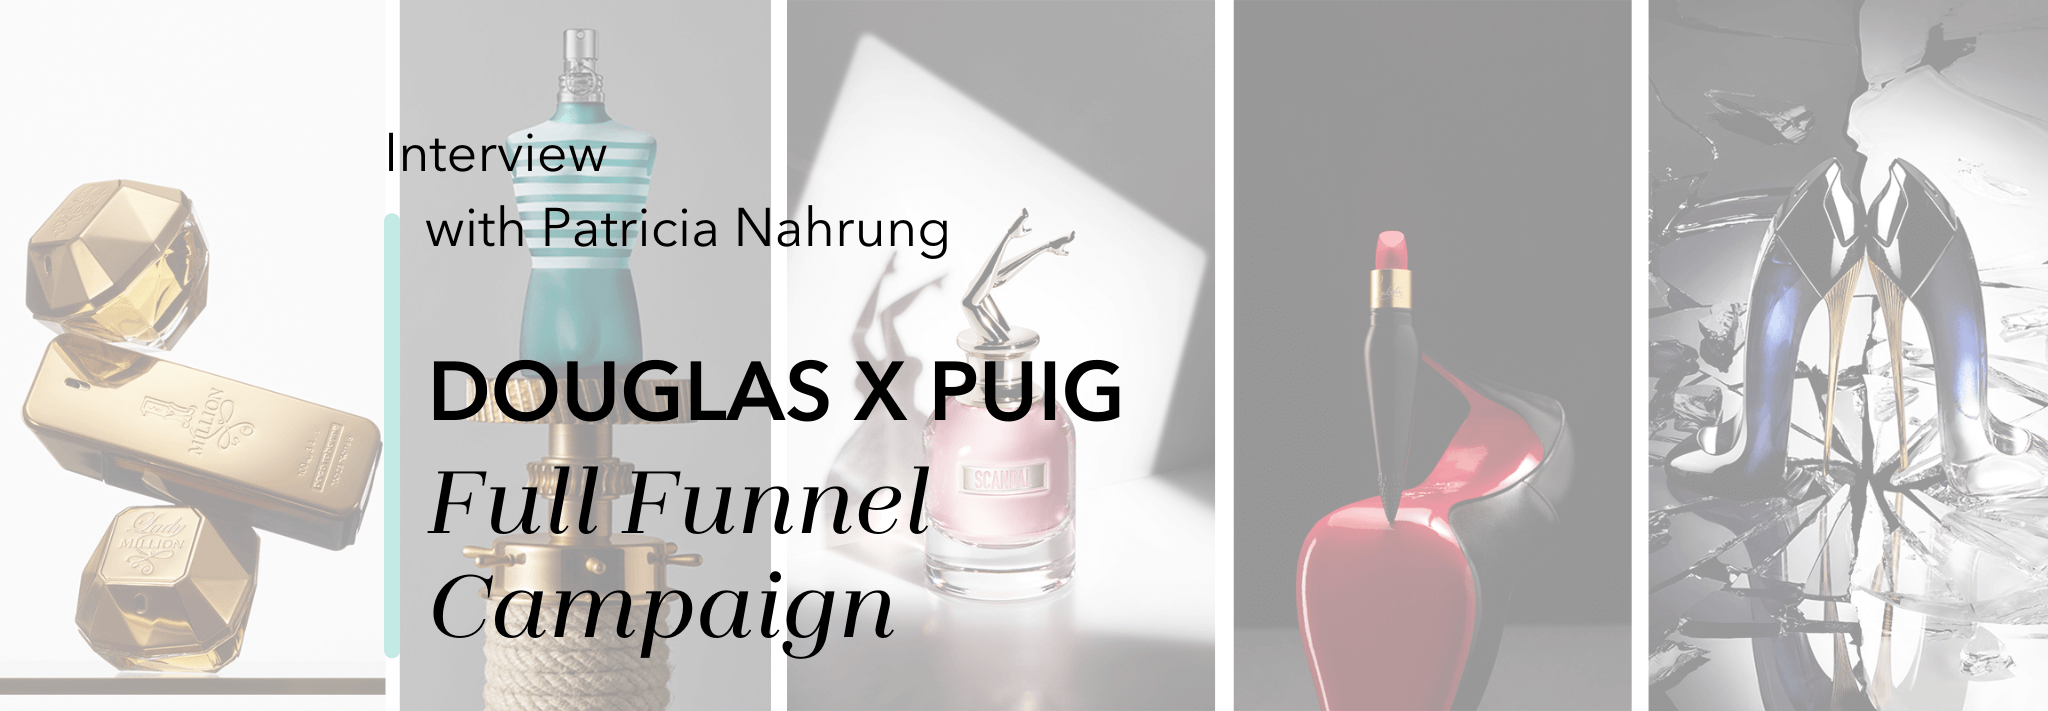 Douglas x PUIG Full Funnel Campaign